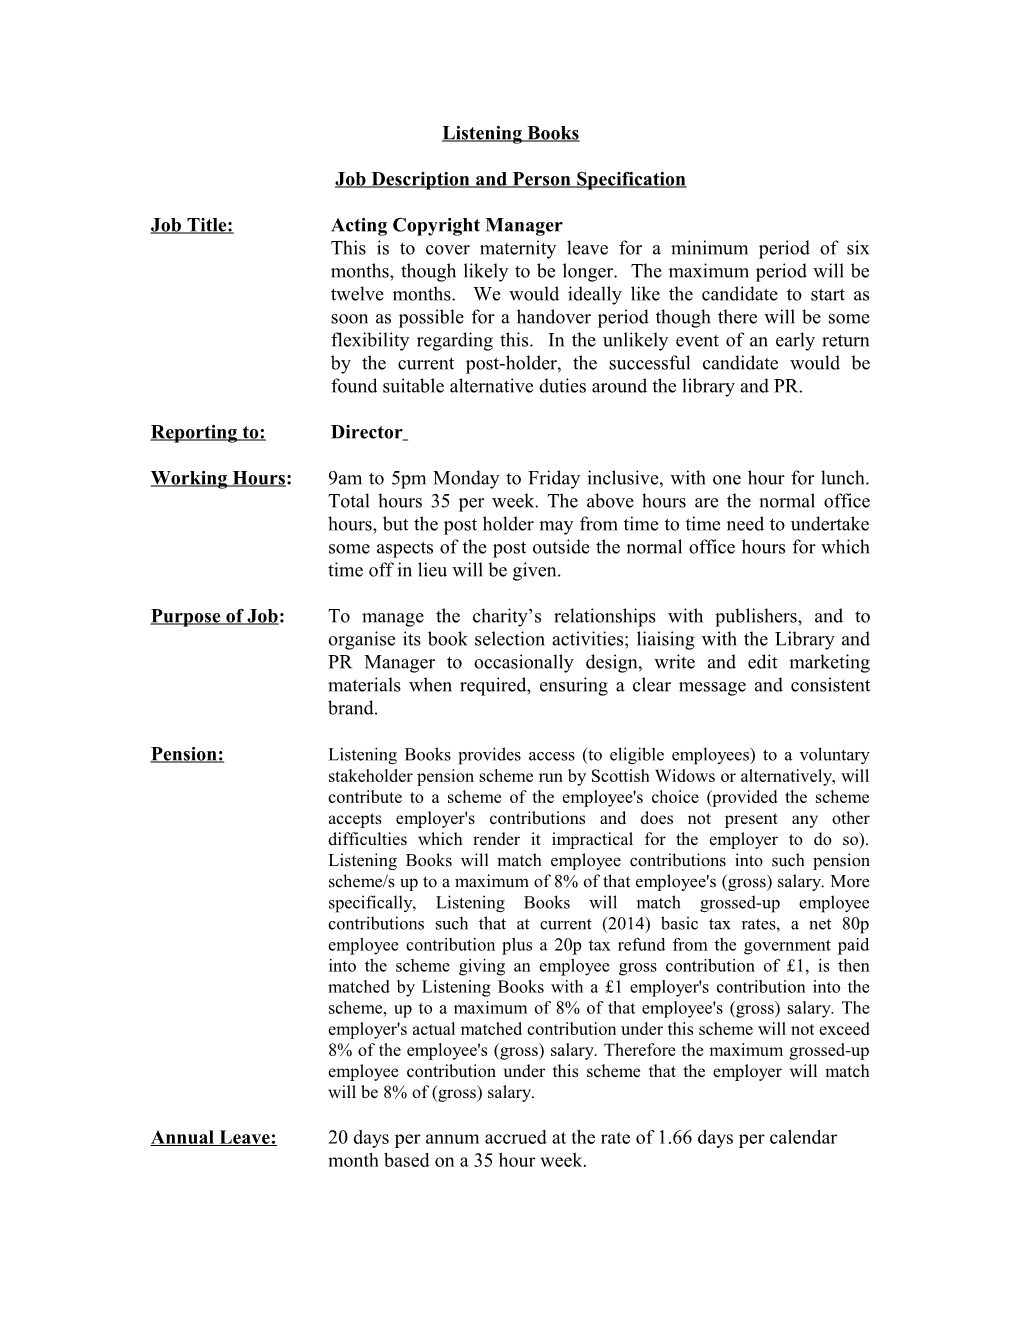 Job Description and Person Specification s5